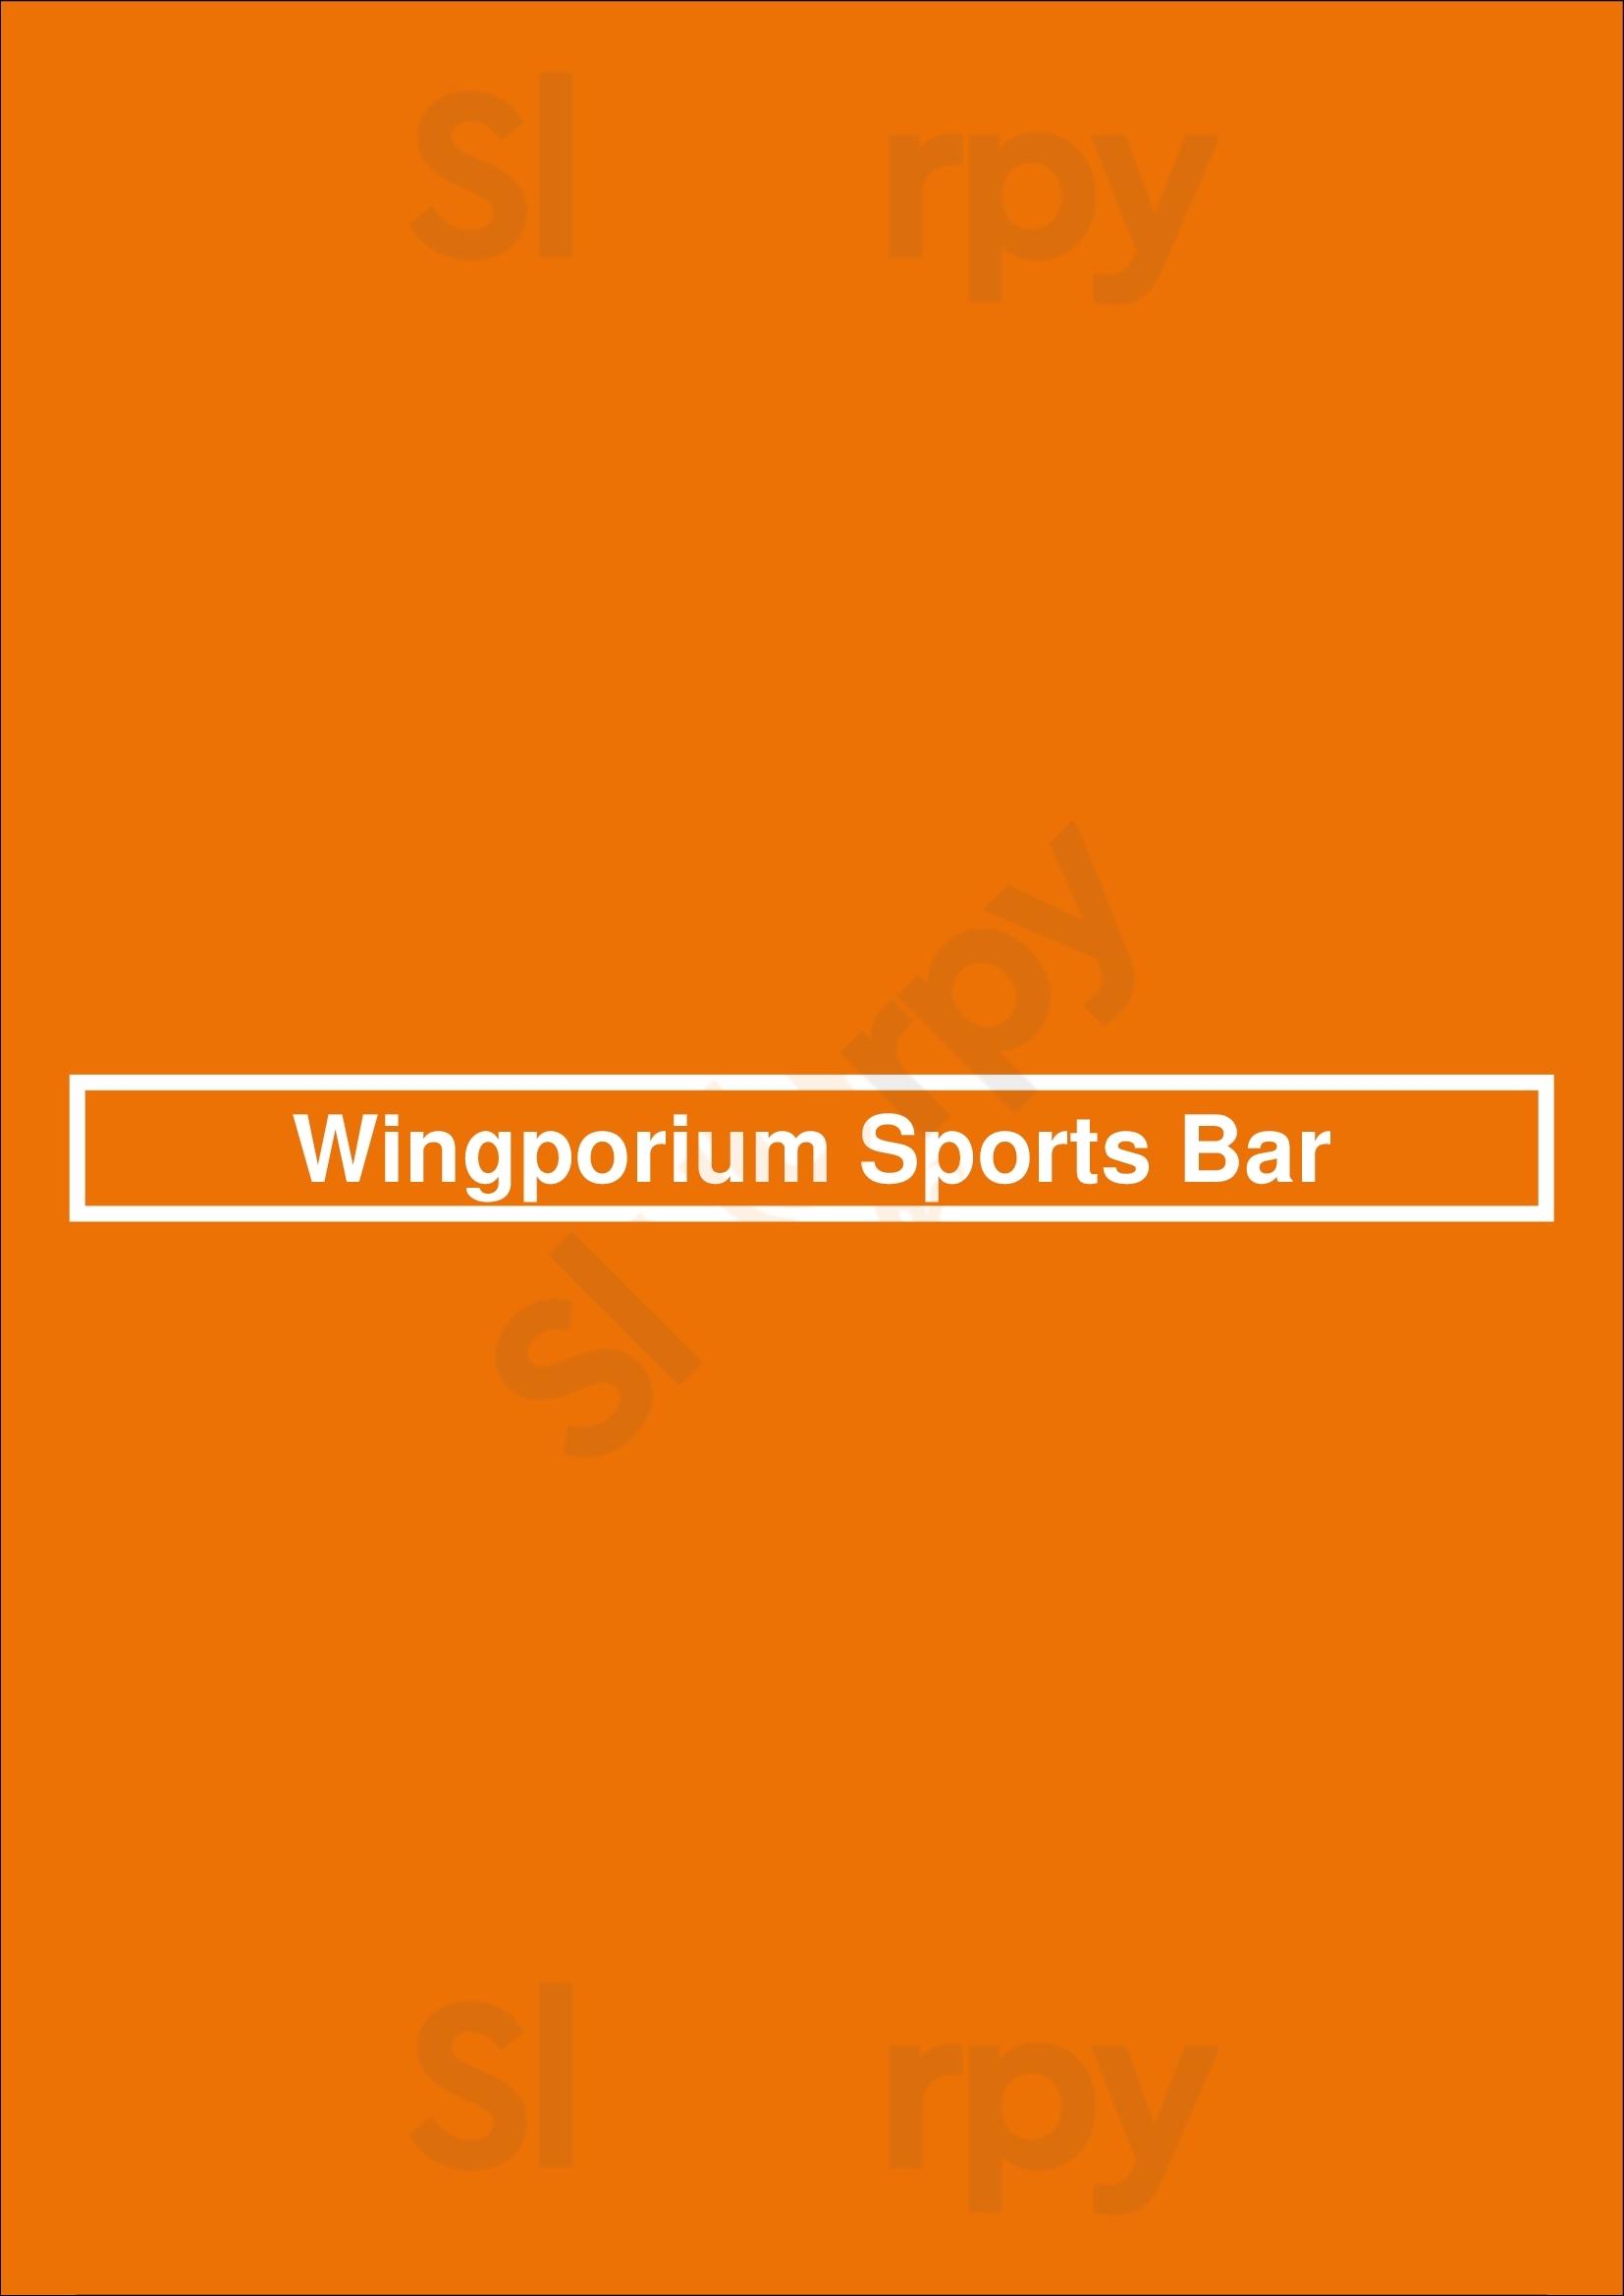 Wingporium Sports Bar Mississauga Menu - 1